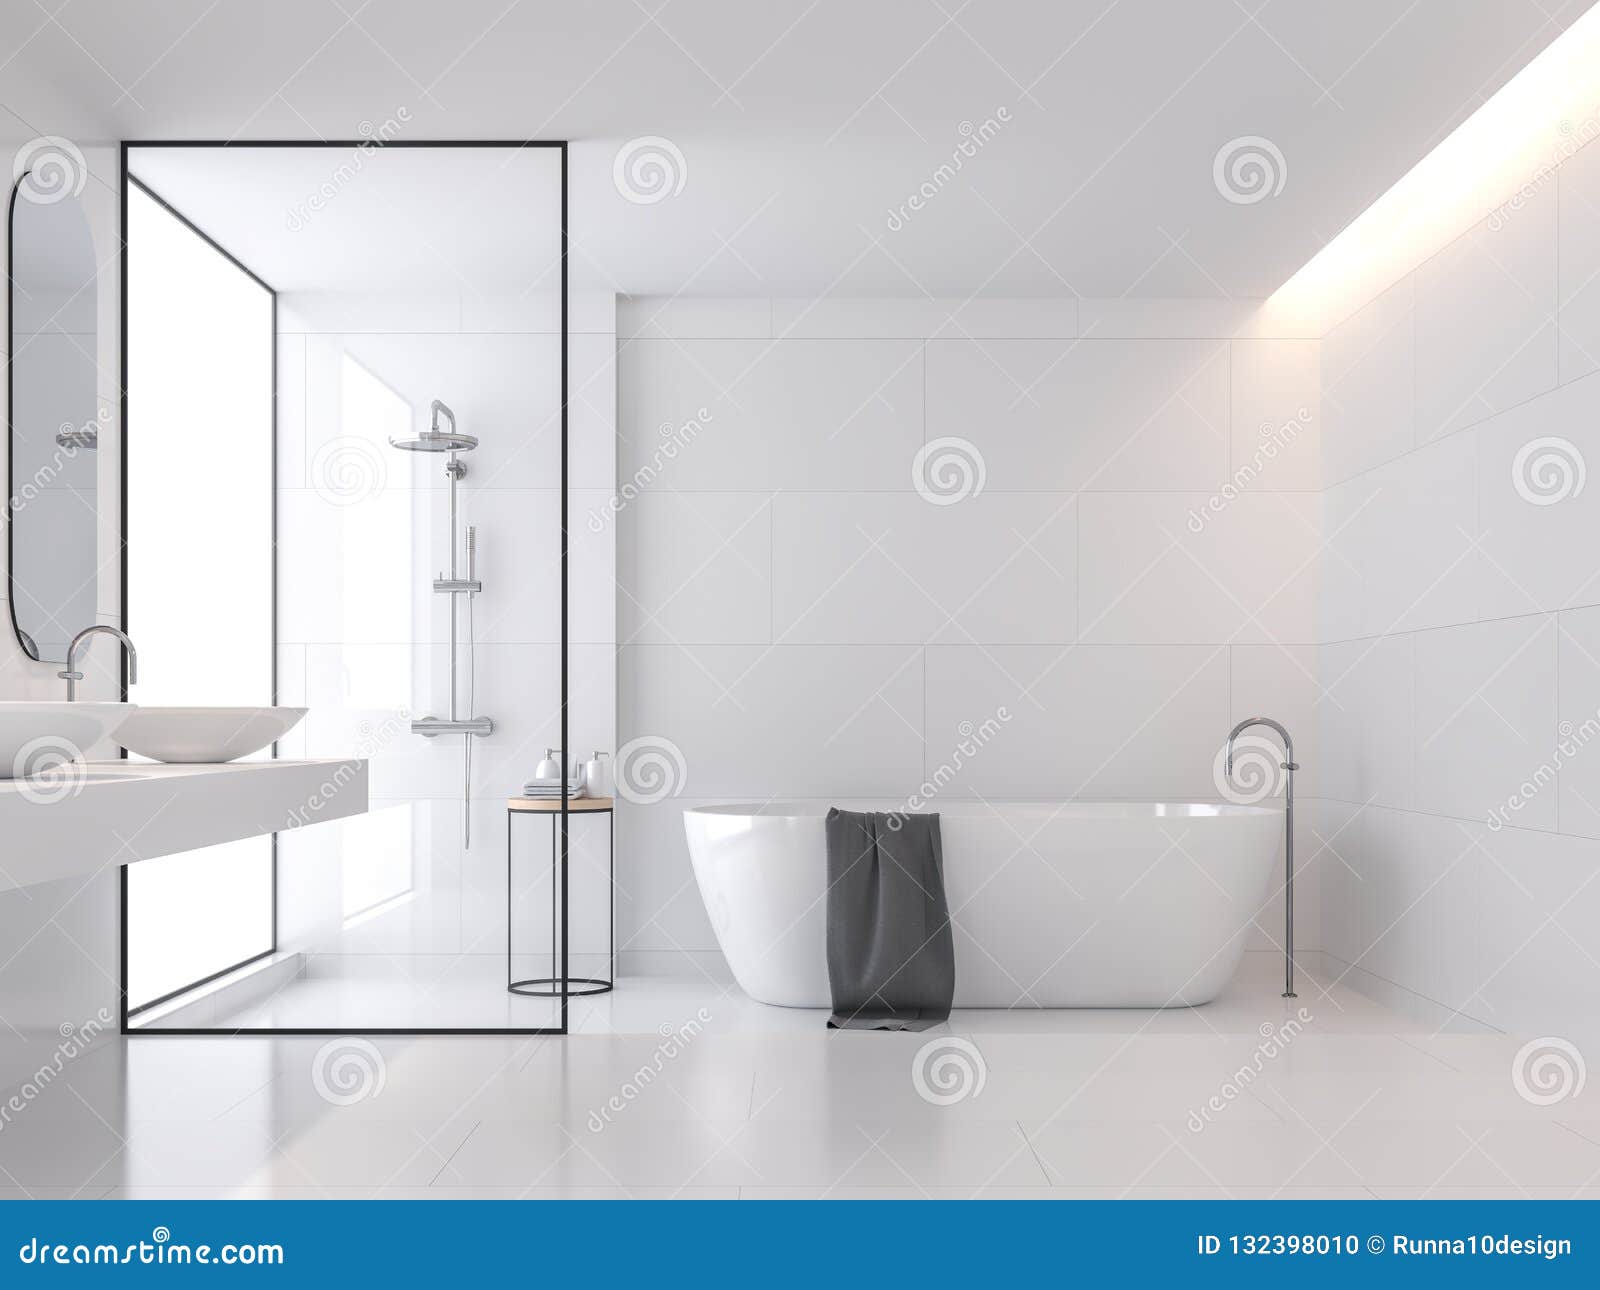 minimal style white bathroom 3d render